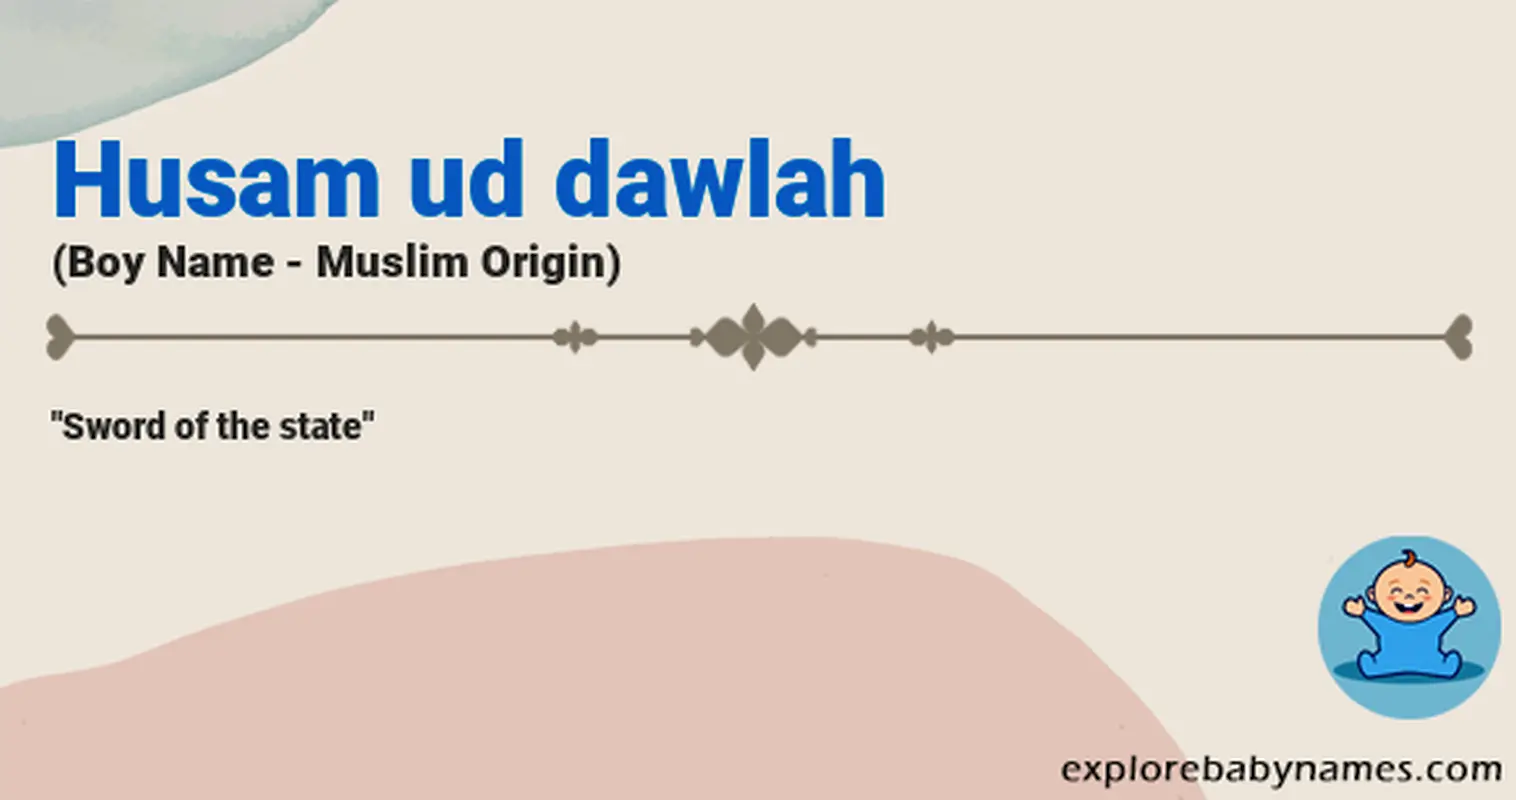 Meaning of Husam ud dawlah